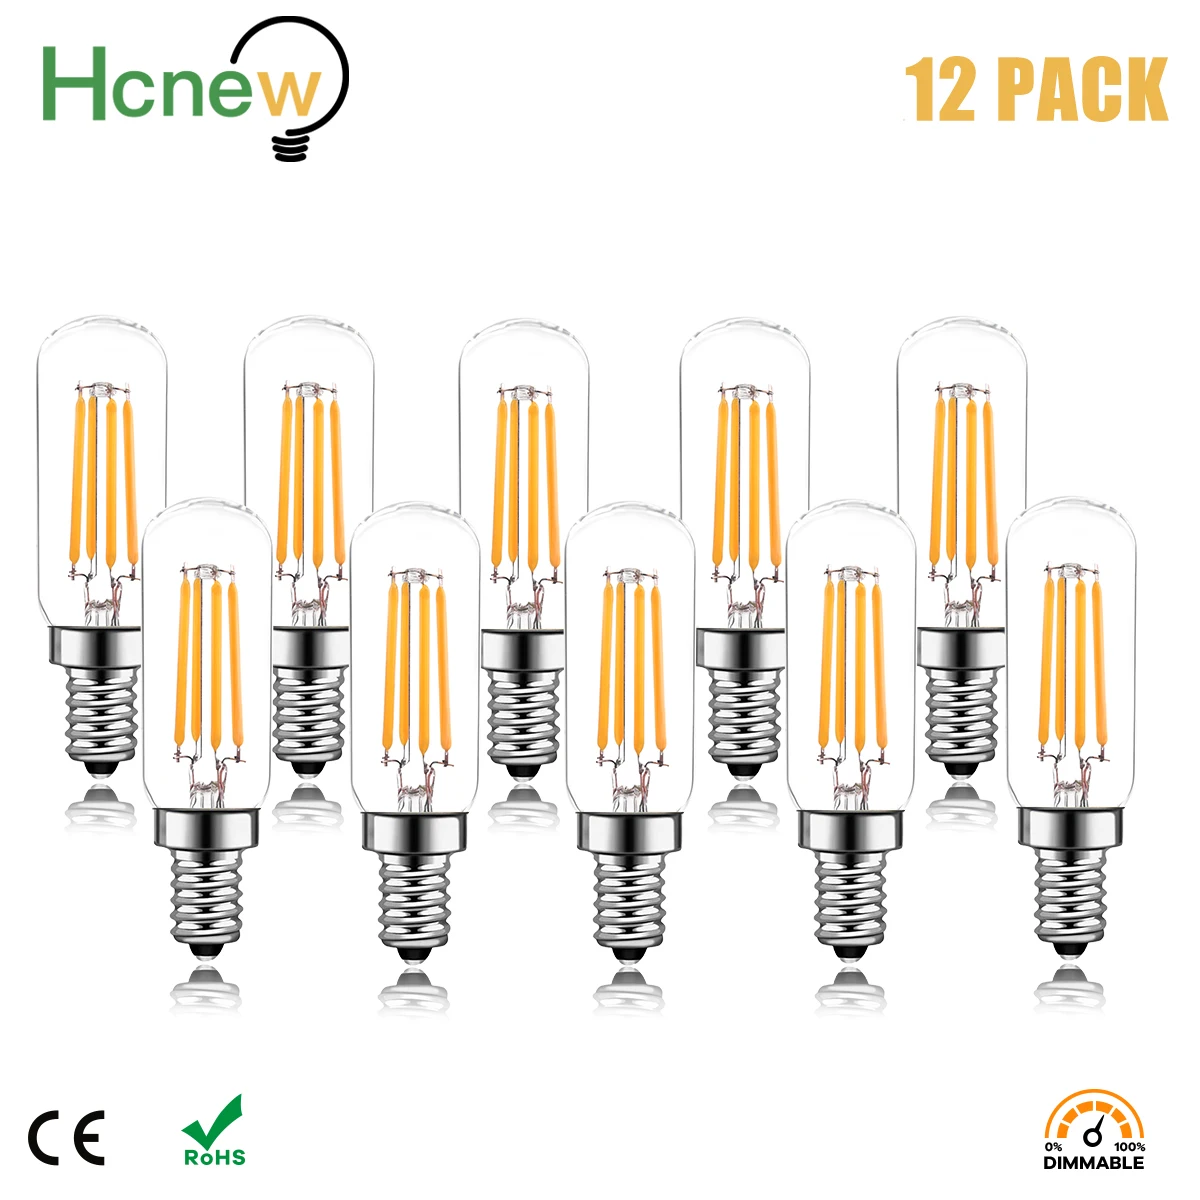 Hcnew LED Filament Bulbs T25 Tubular 4W LED Dimmable Lamp Chandelier Pendant Lamp E12 110V E14 220V Warm White 2700K